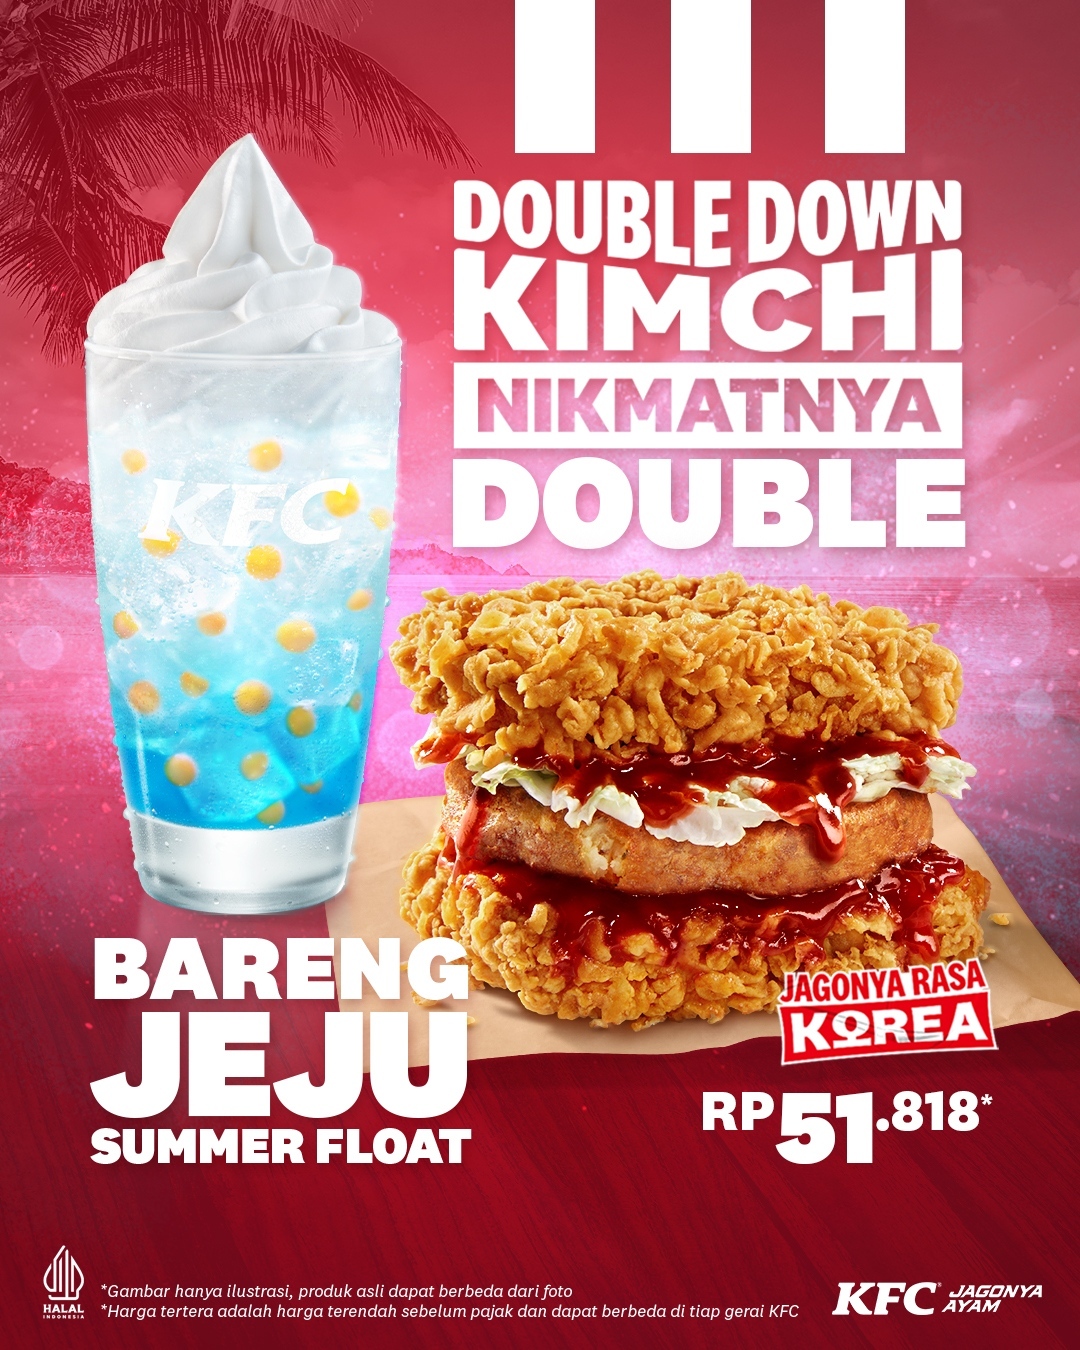 PROMO KFC DOUBLE DOWN KIMCHI + JEJU SUMMER FLOAT